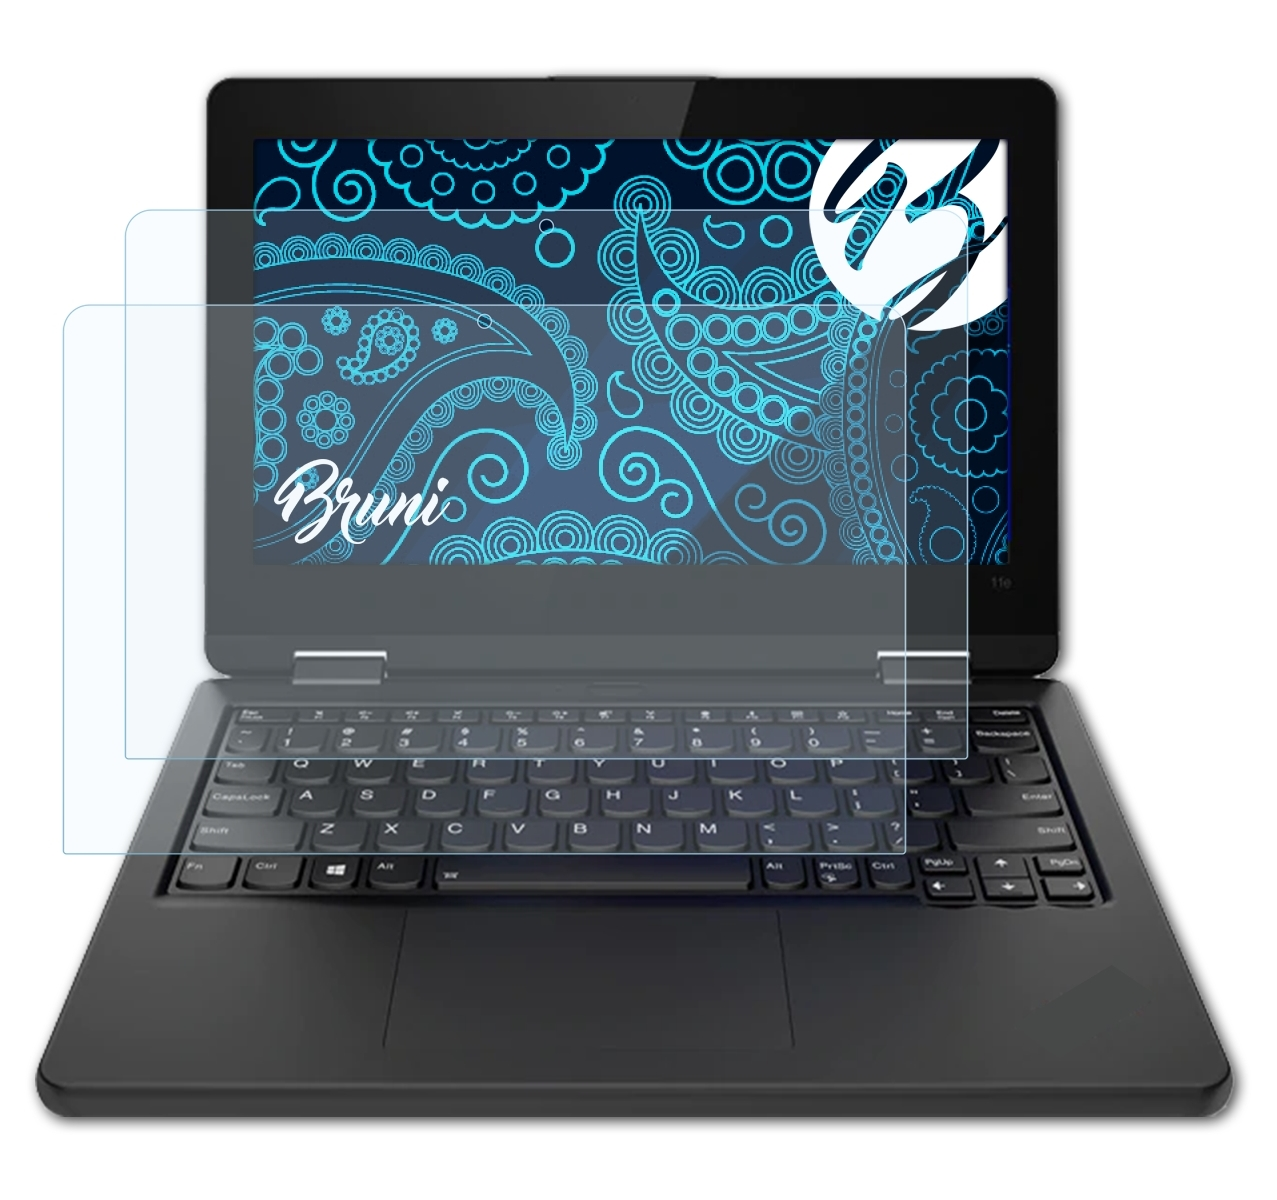 BRUNI 2x ThinkPad Lenovo Schutzfolie(für 11e 6)) (Gen Basics-Clear Yoga